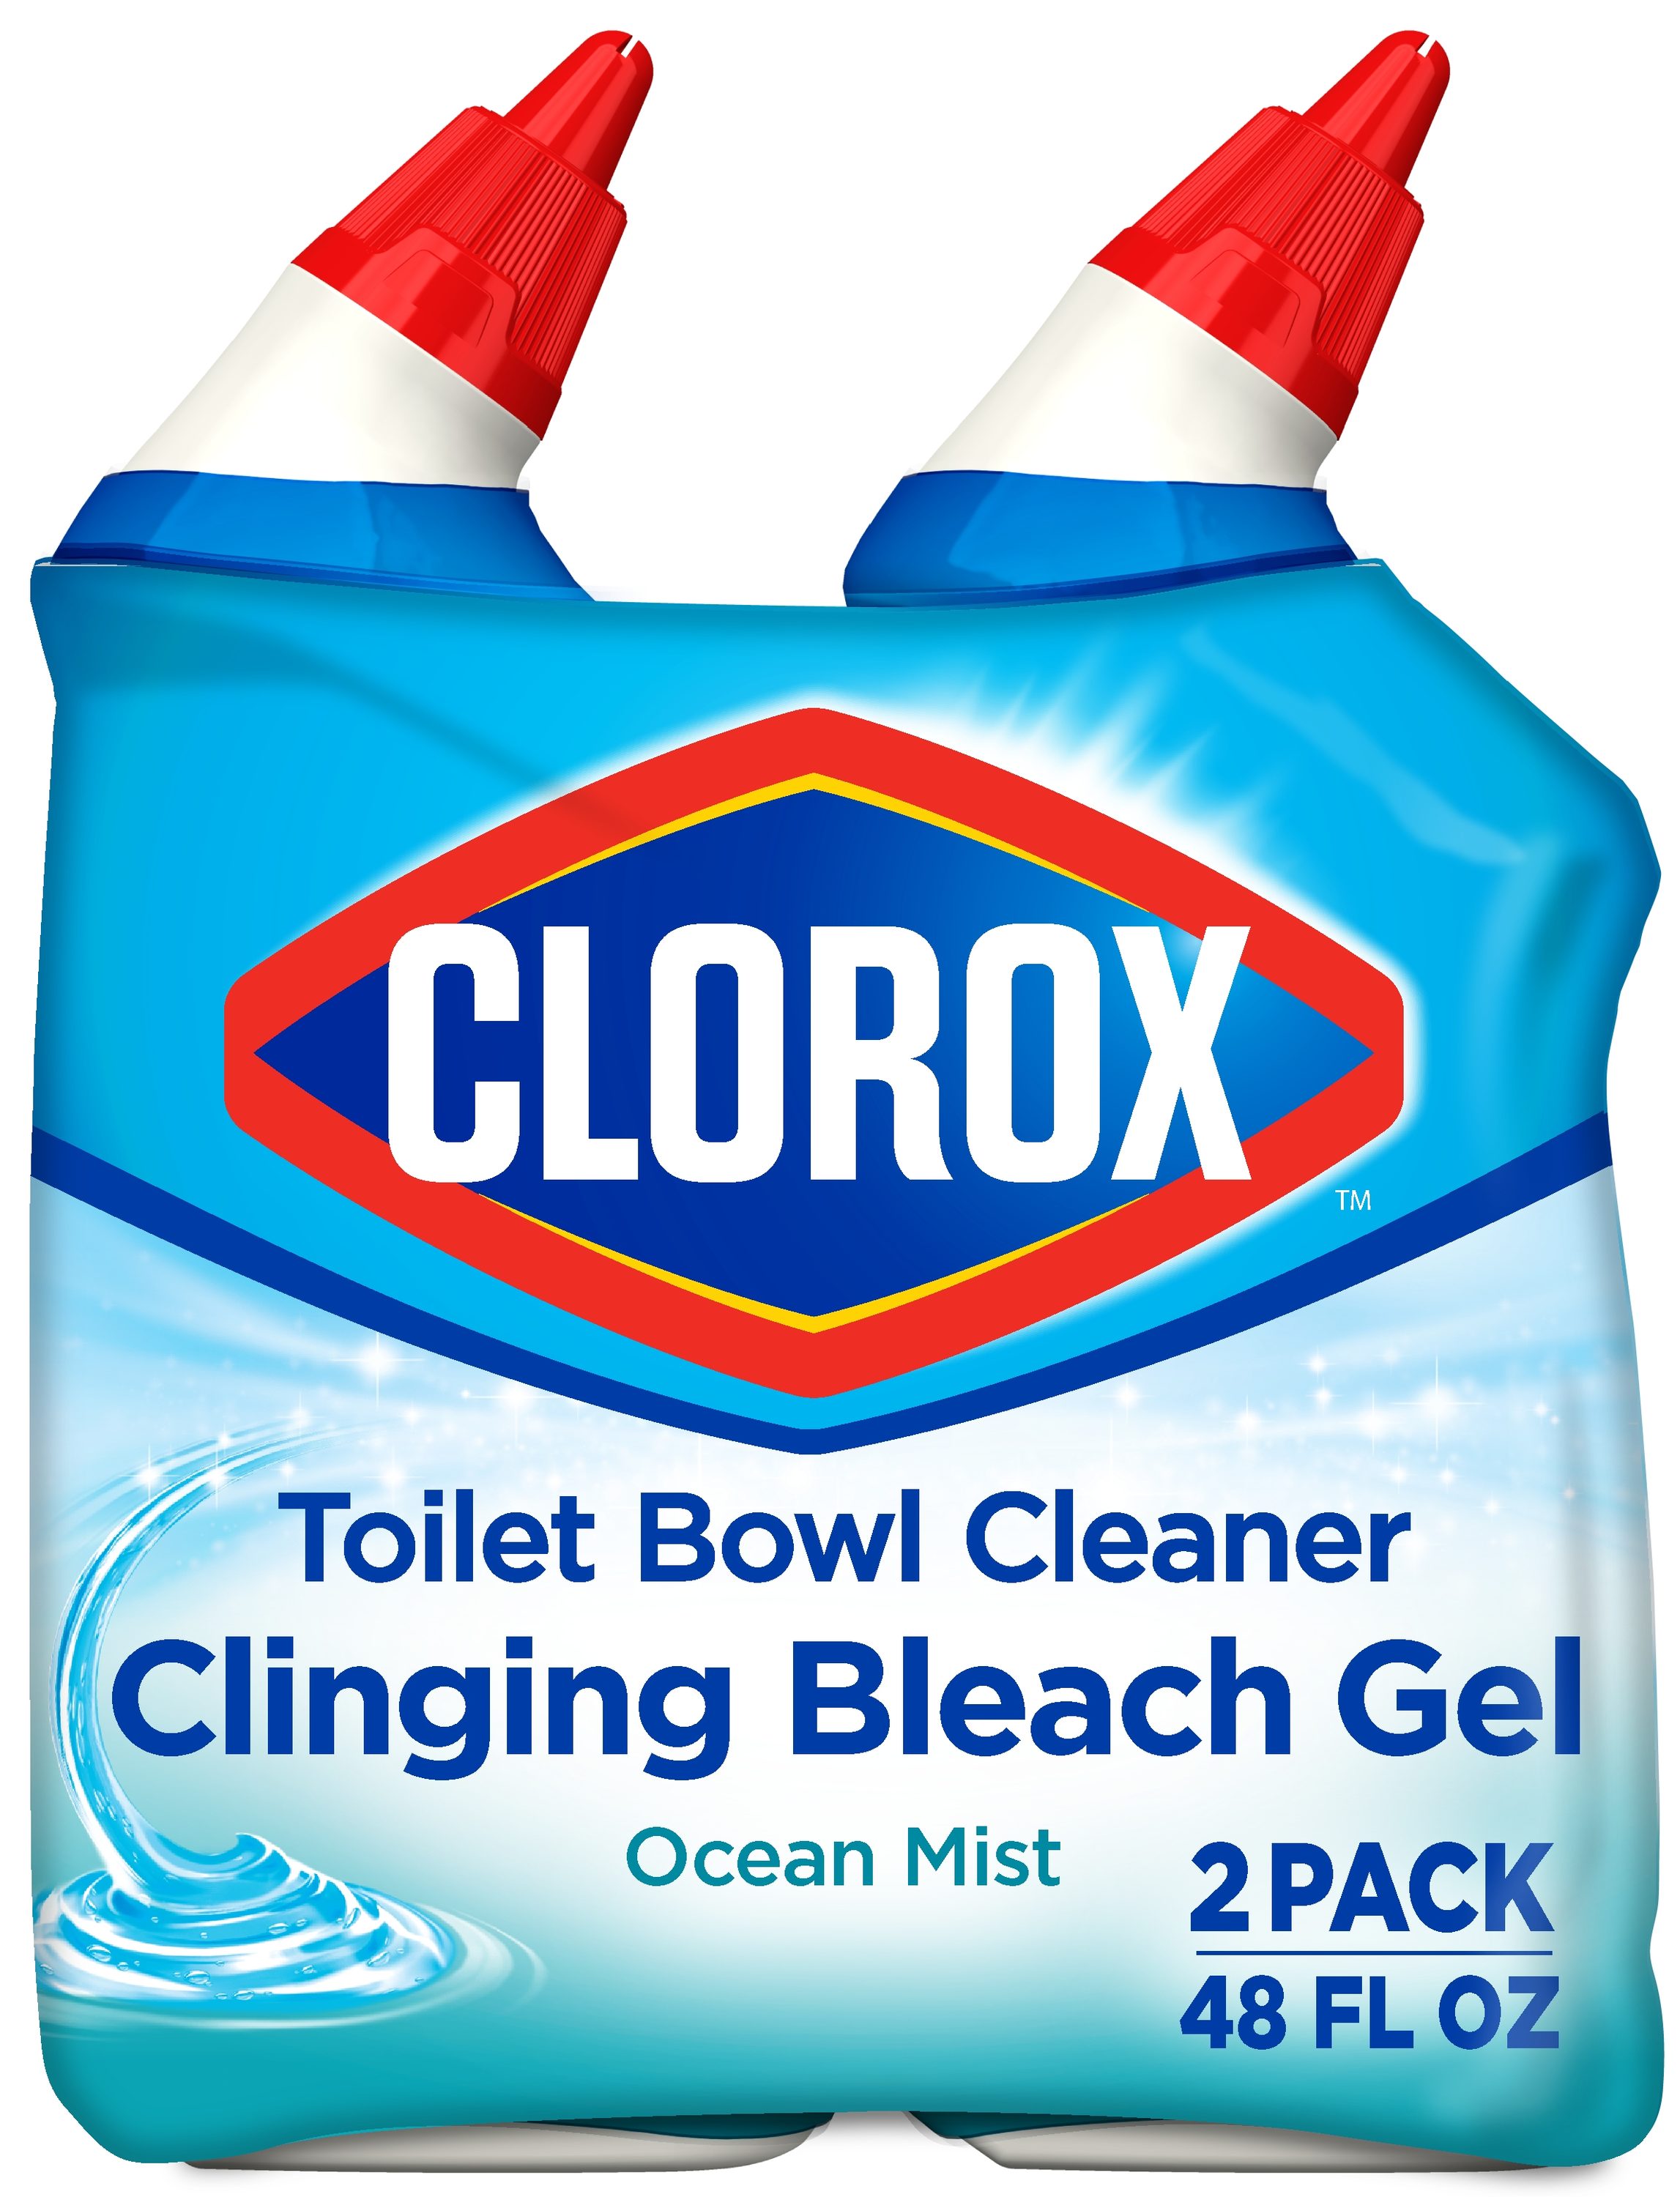 Clorox ToiletWand System - Office Depot